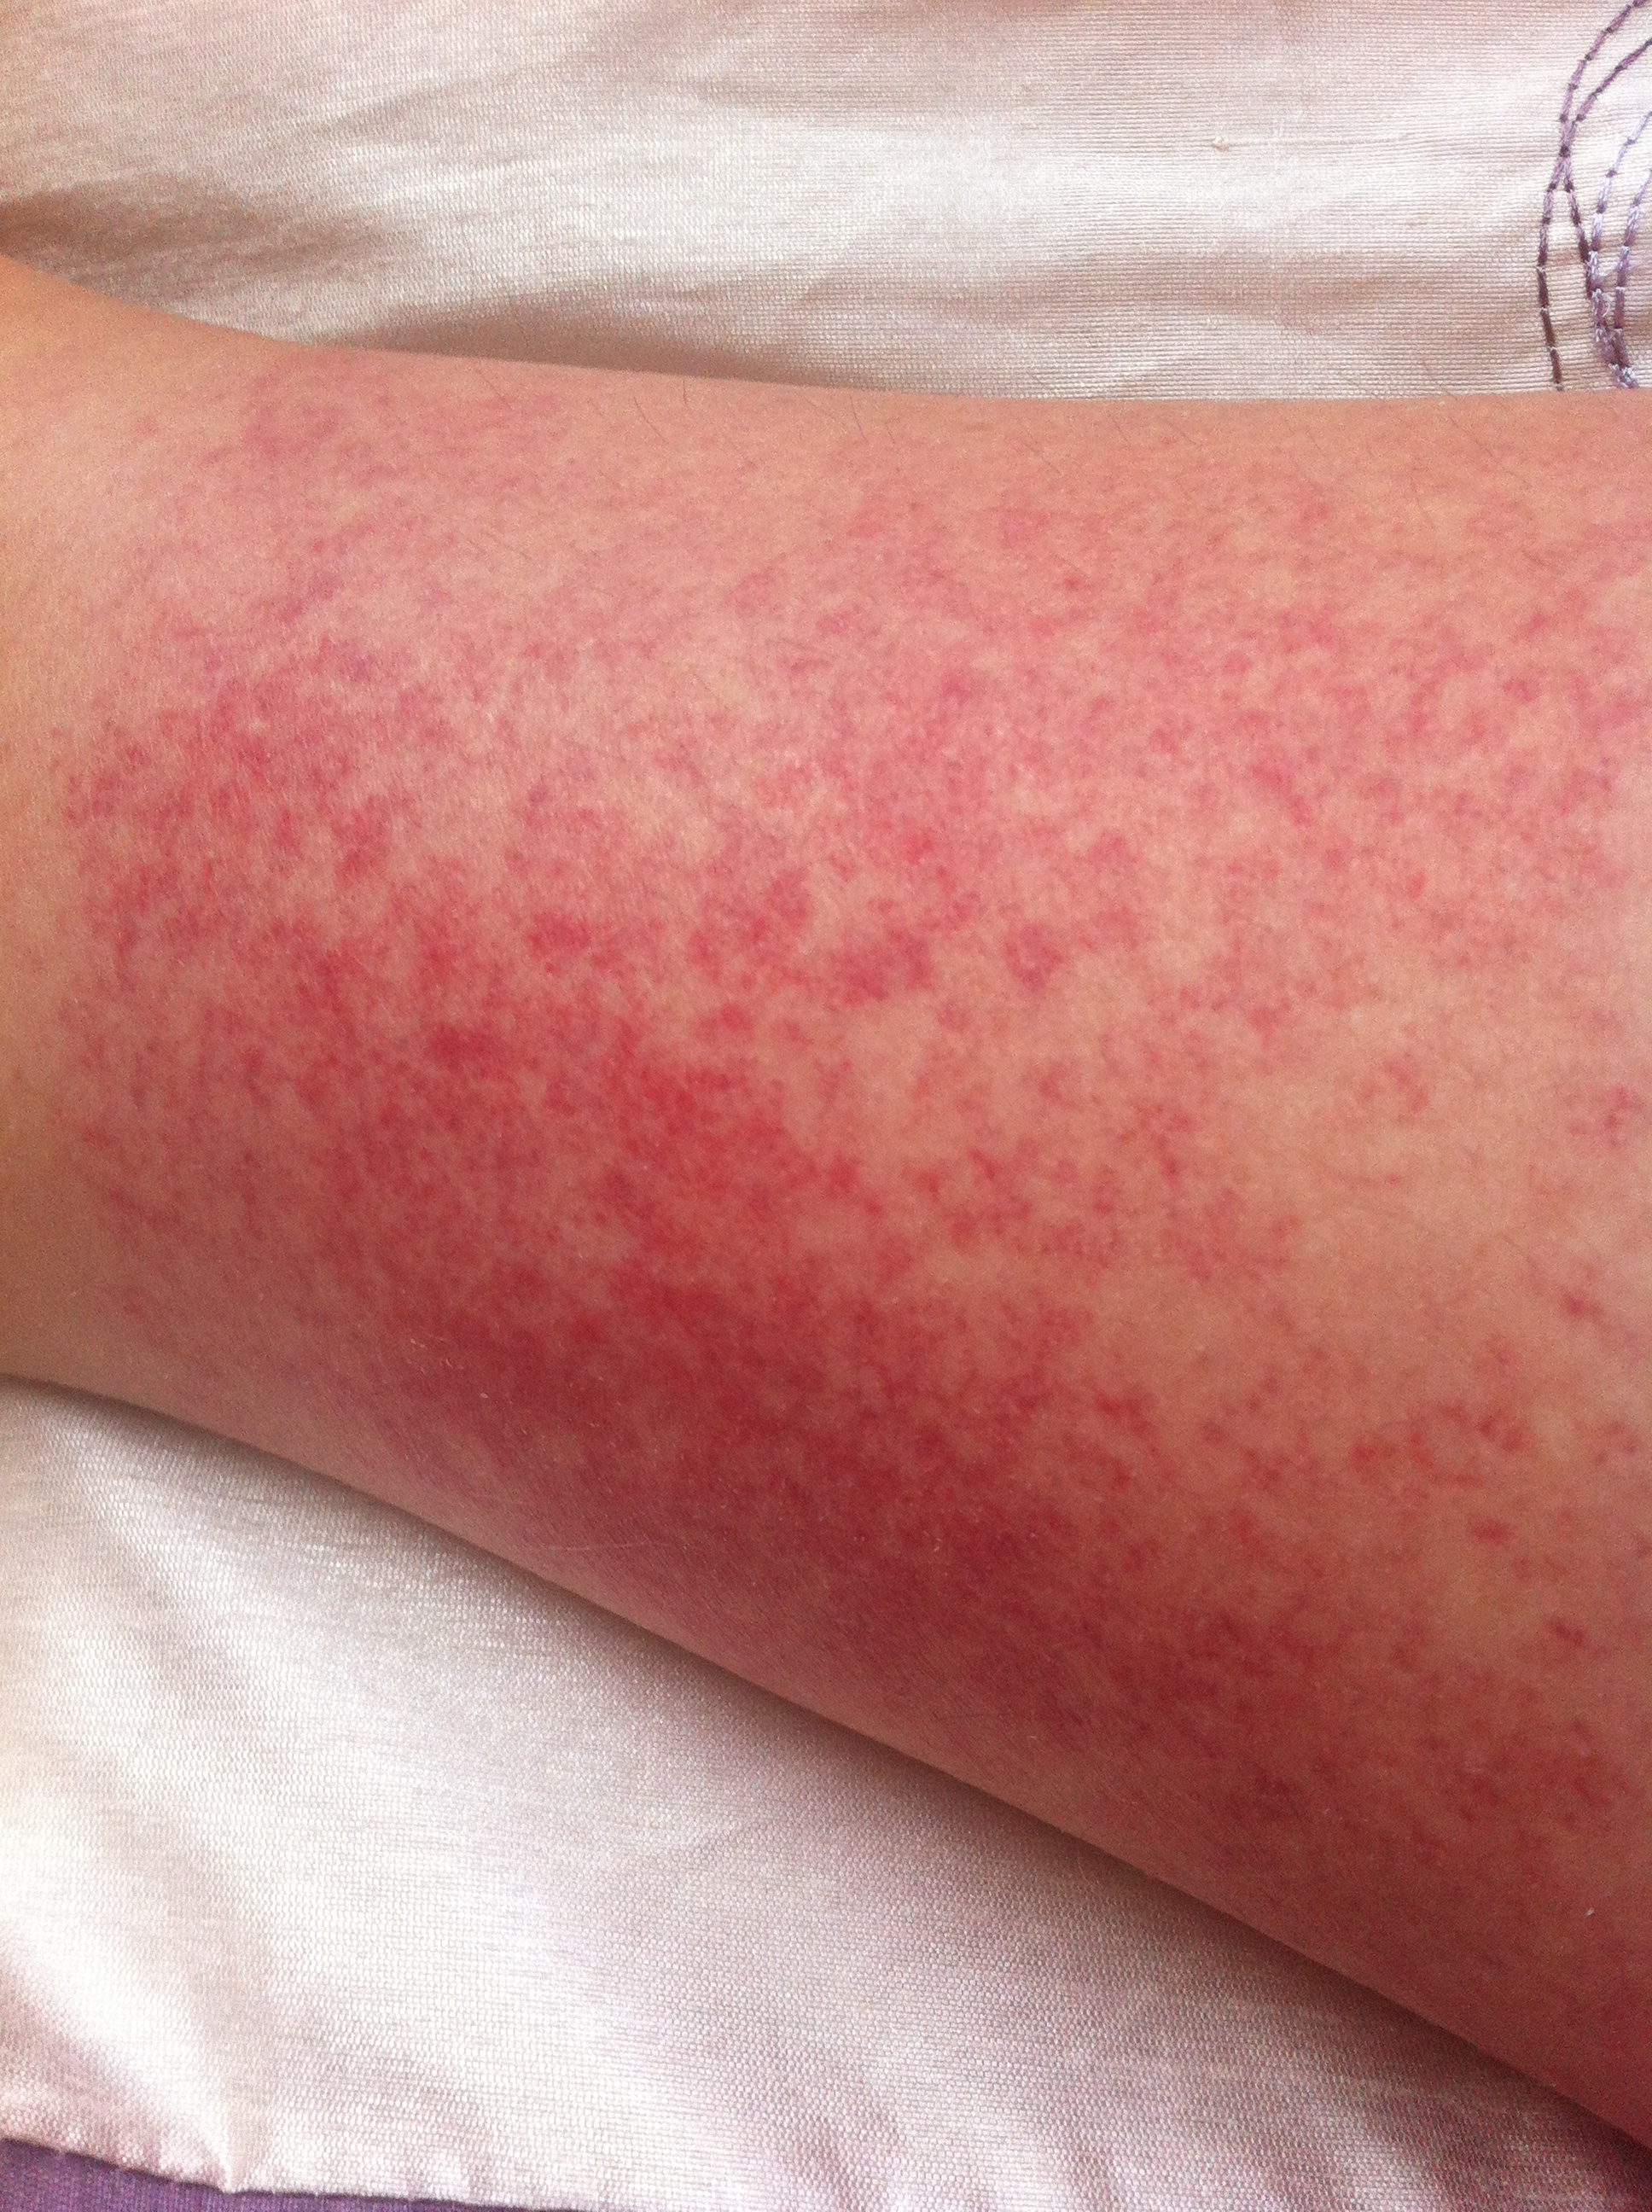 Unexplained Rash On Legs 37